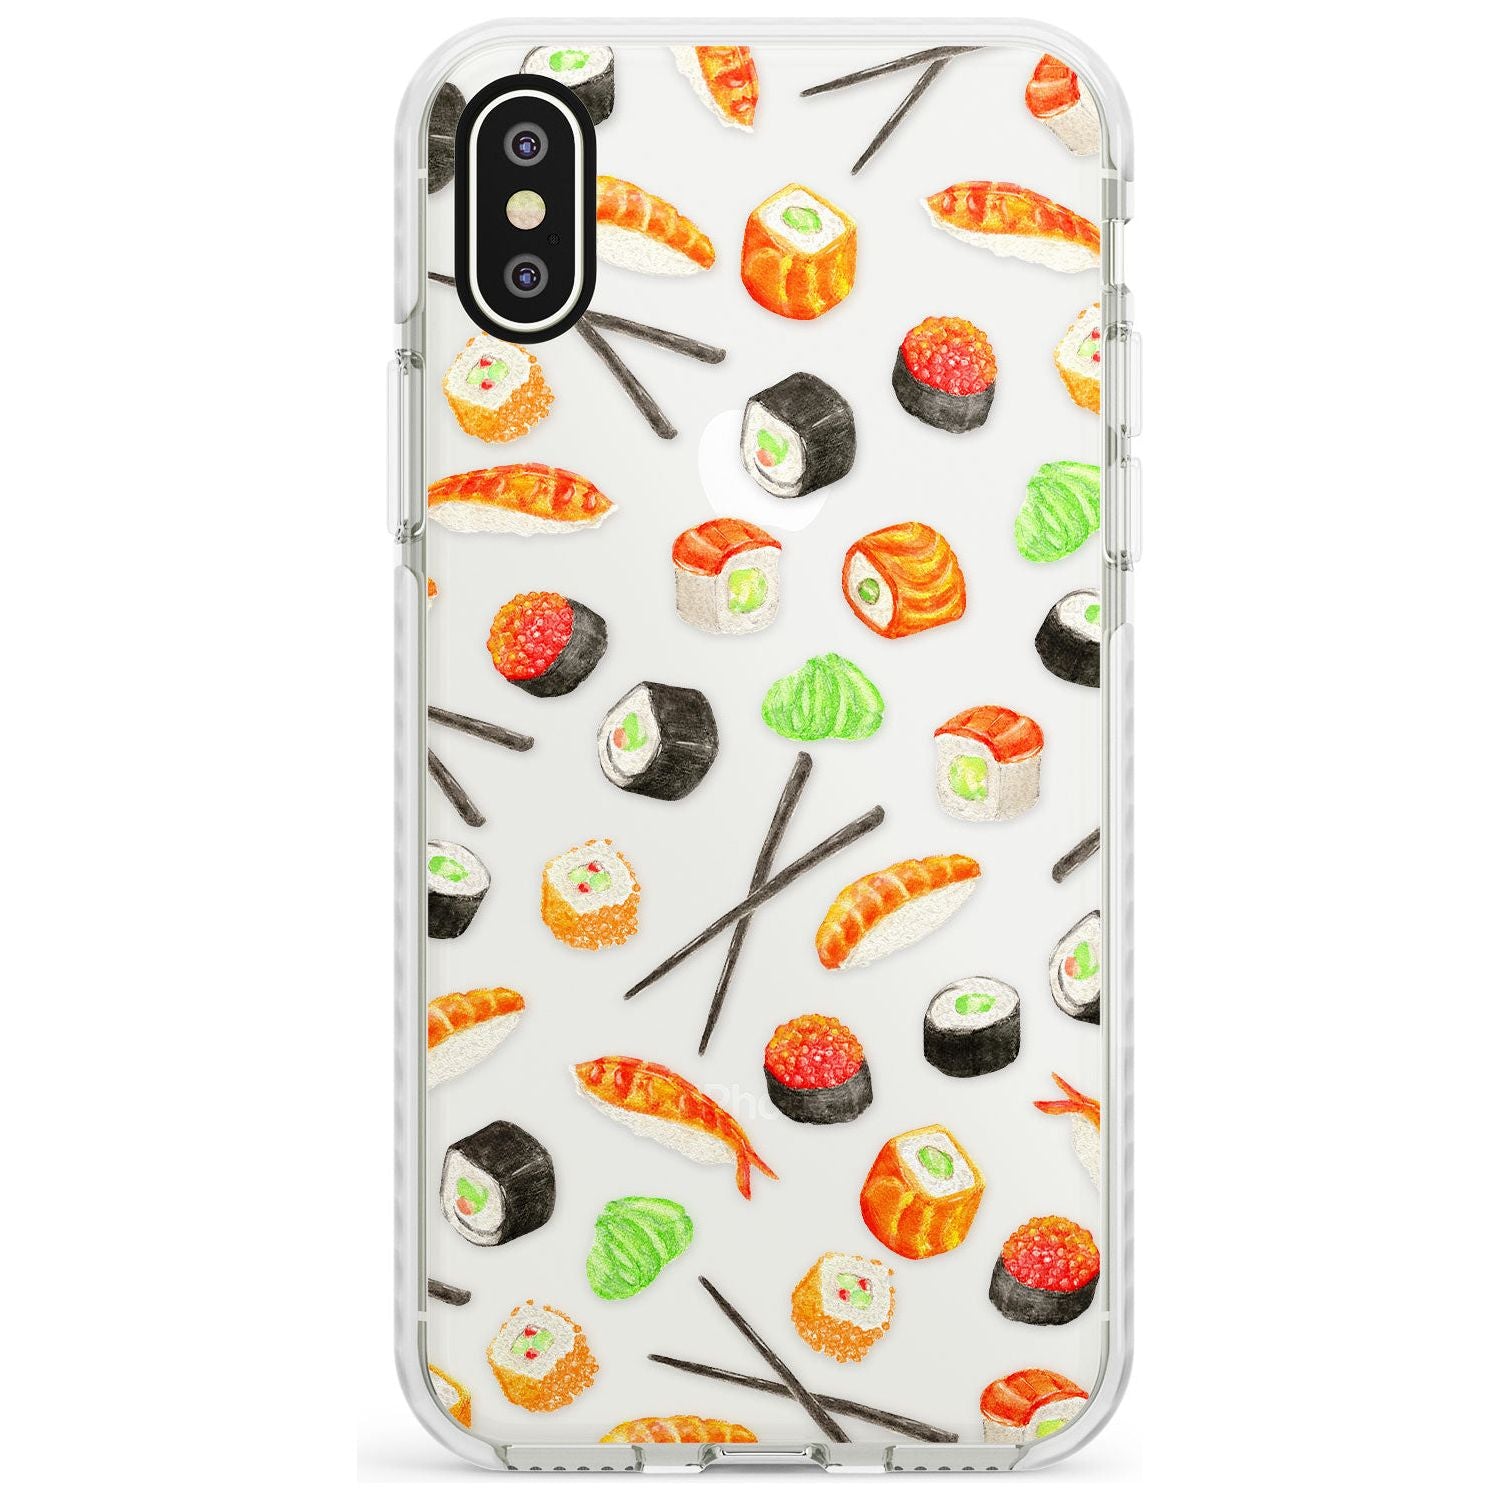 Sushi & Chopsticks Watercolour Pattern Impact Phone Case for iPhone X XS Max XR